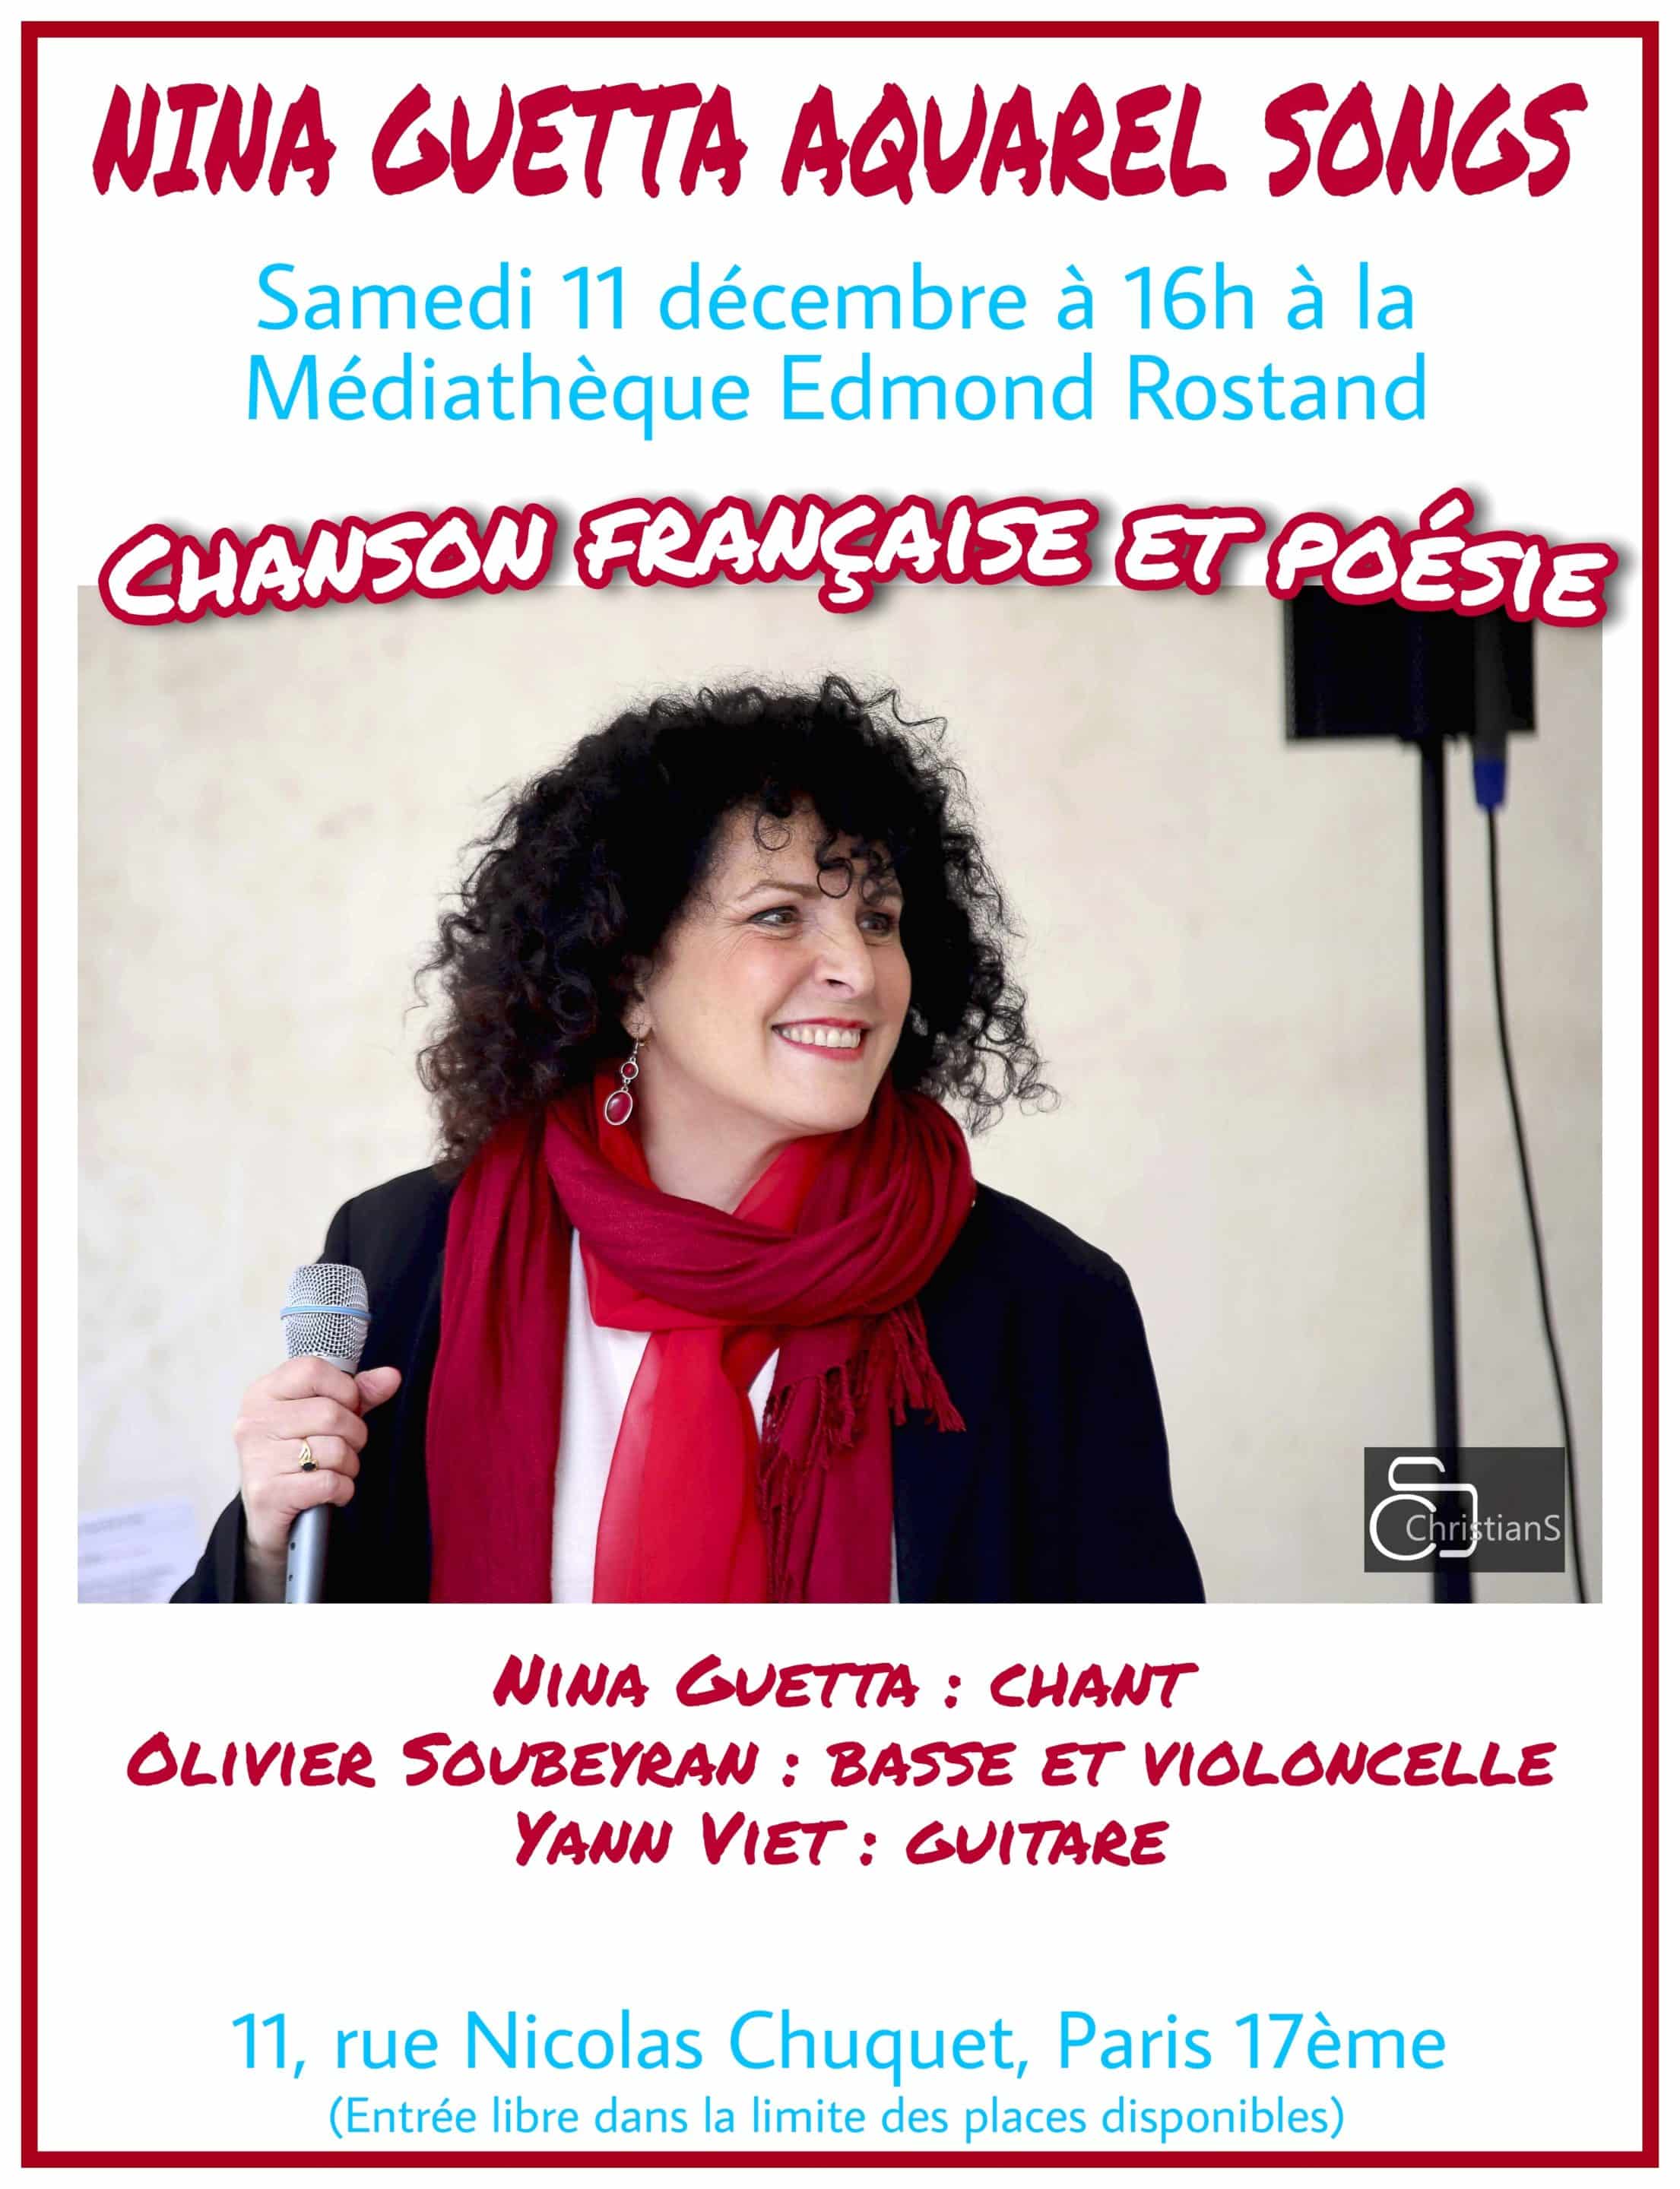 Concert at the Media Library “Edmond Rostand” of Paris 17ème, saturday the 11.12.2021 – Chanson Française